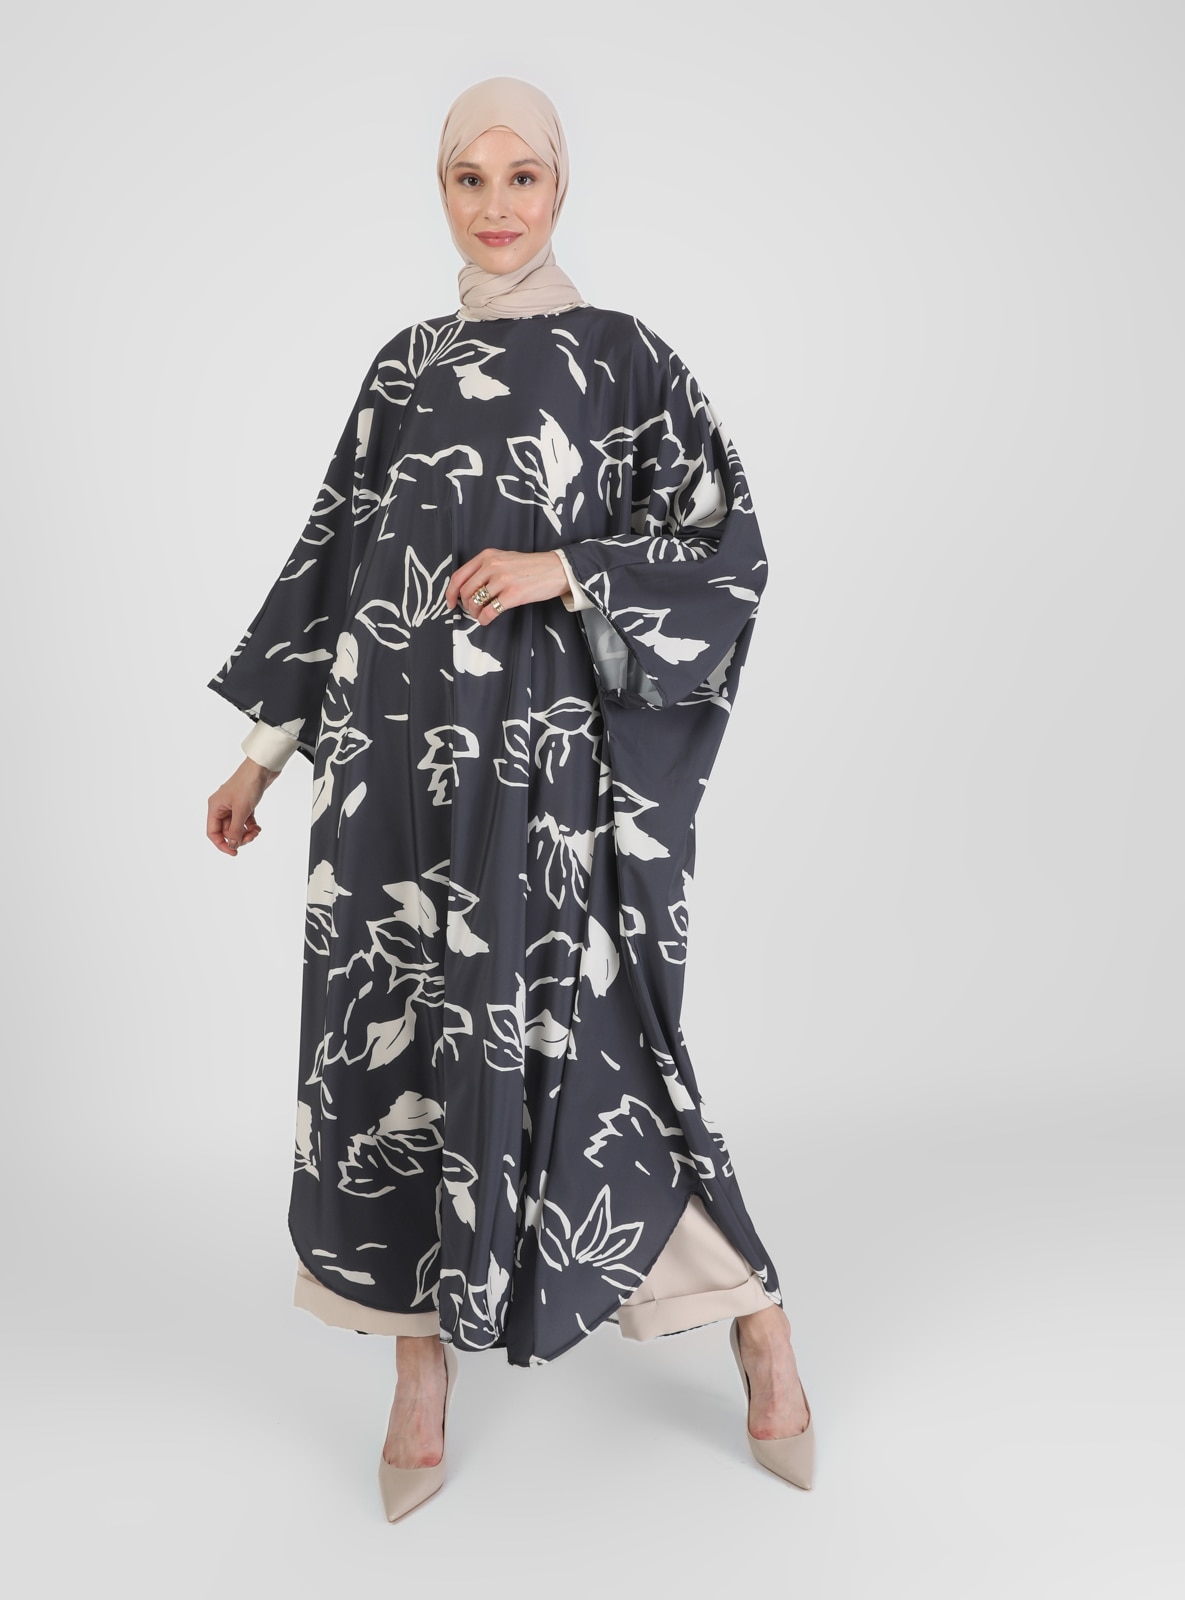 Beige - Black - Printed - Floral - Multi - Unlined - Crew neck - Abaya